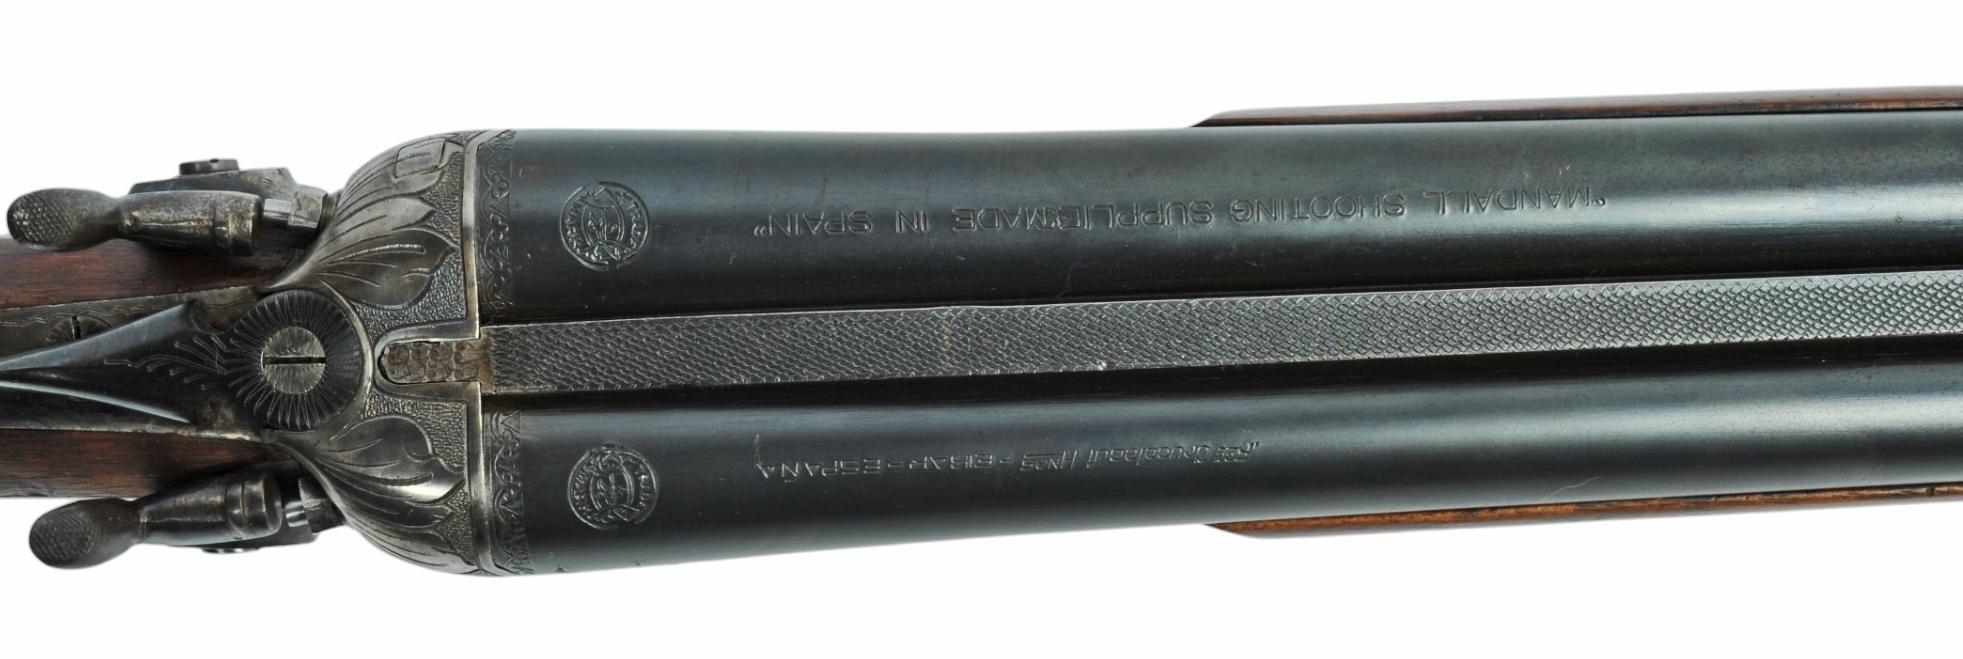 Spanish Eibar 12 Gauge Double-barrel Shotgun FFL Required: 92480 (K1S1)